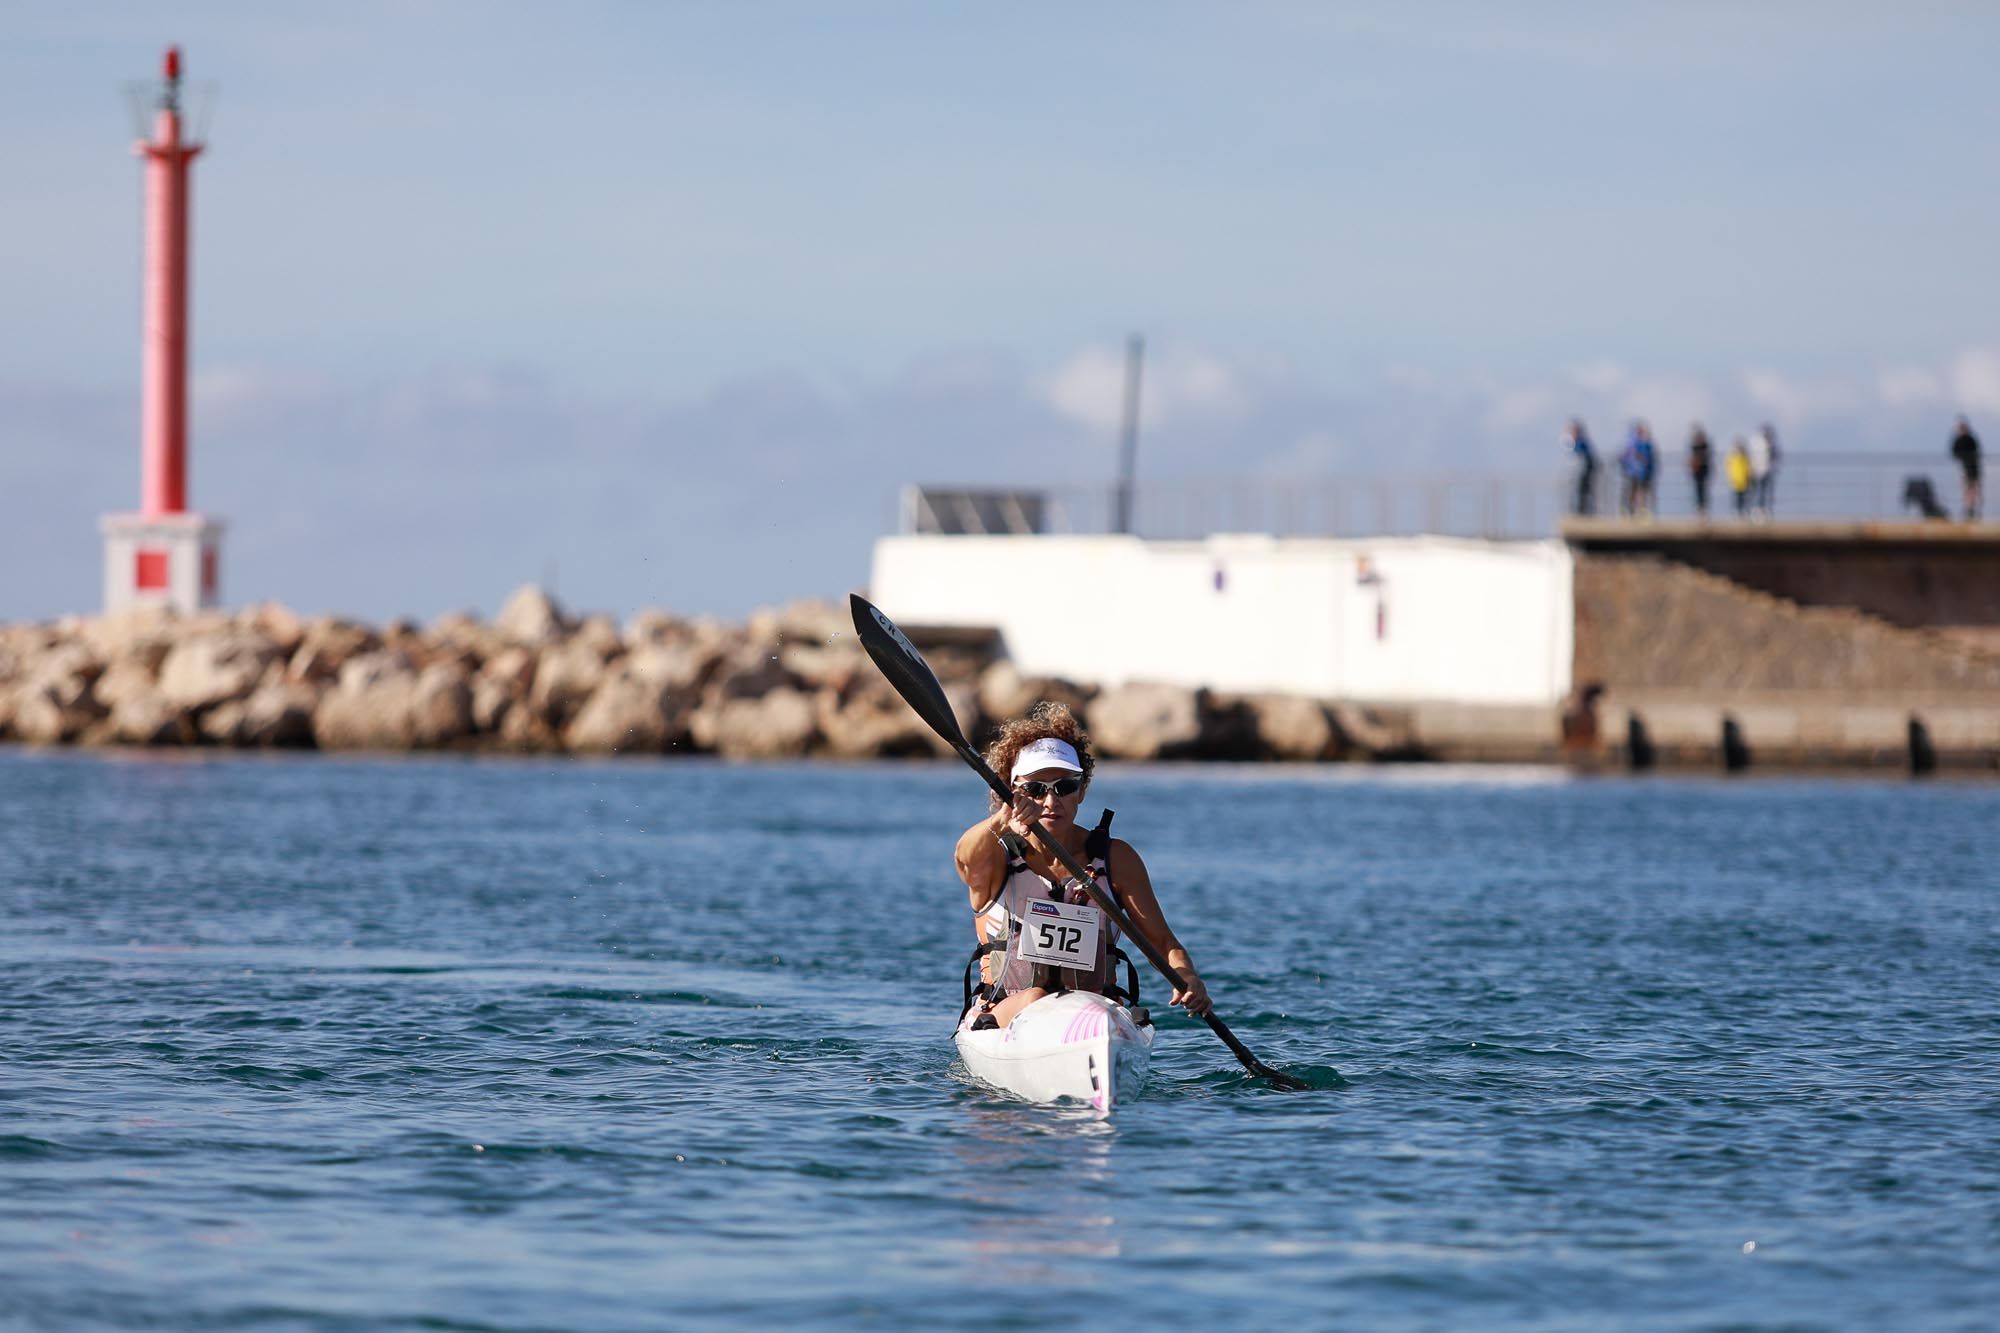 Campeonato balear de kayak de mar en Sant Antoni